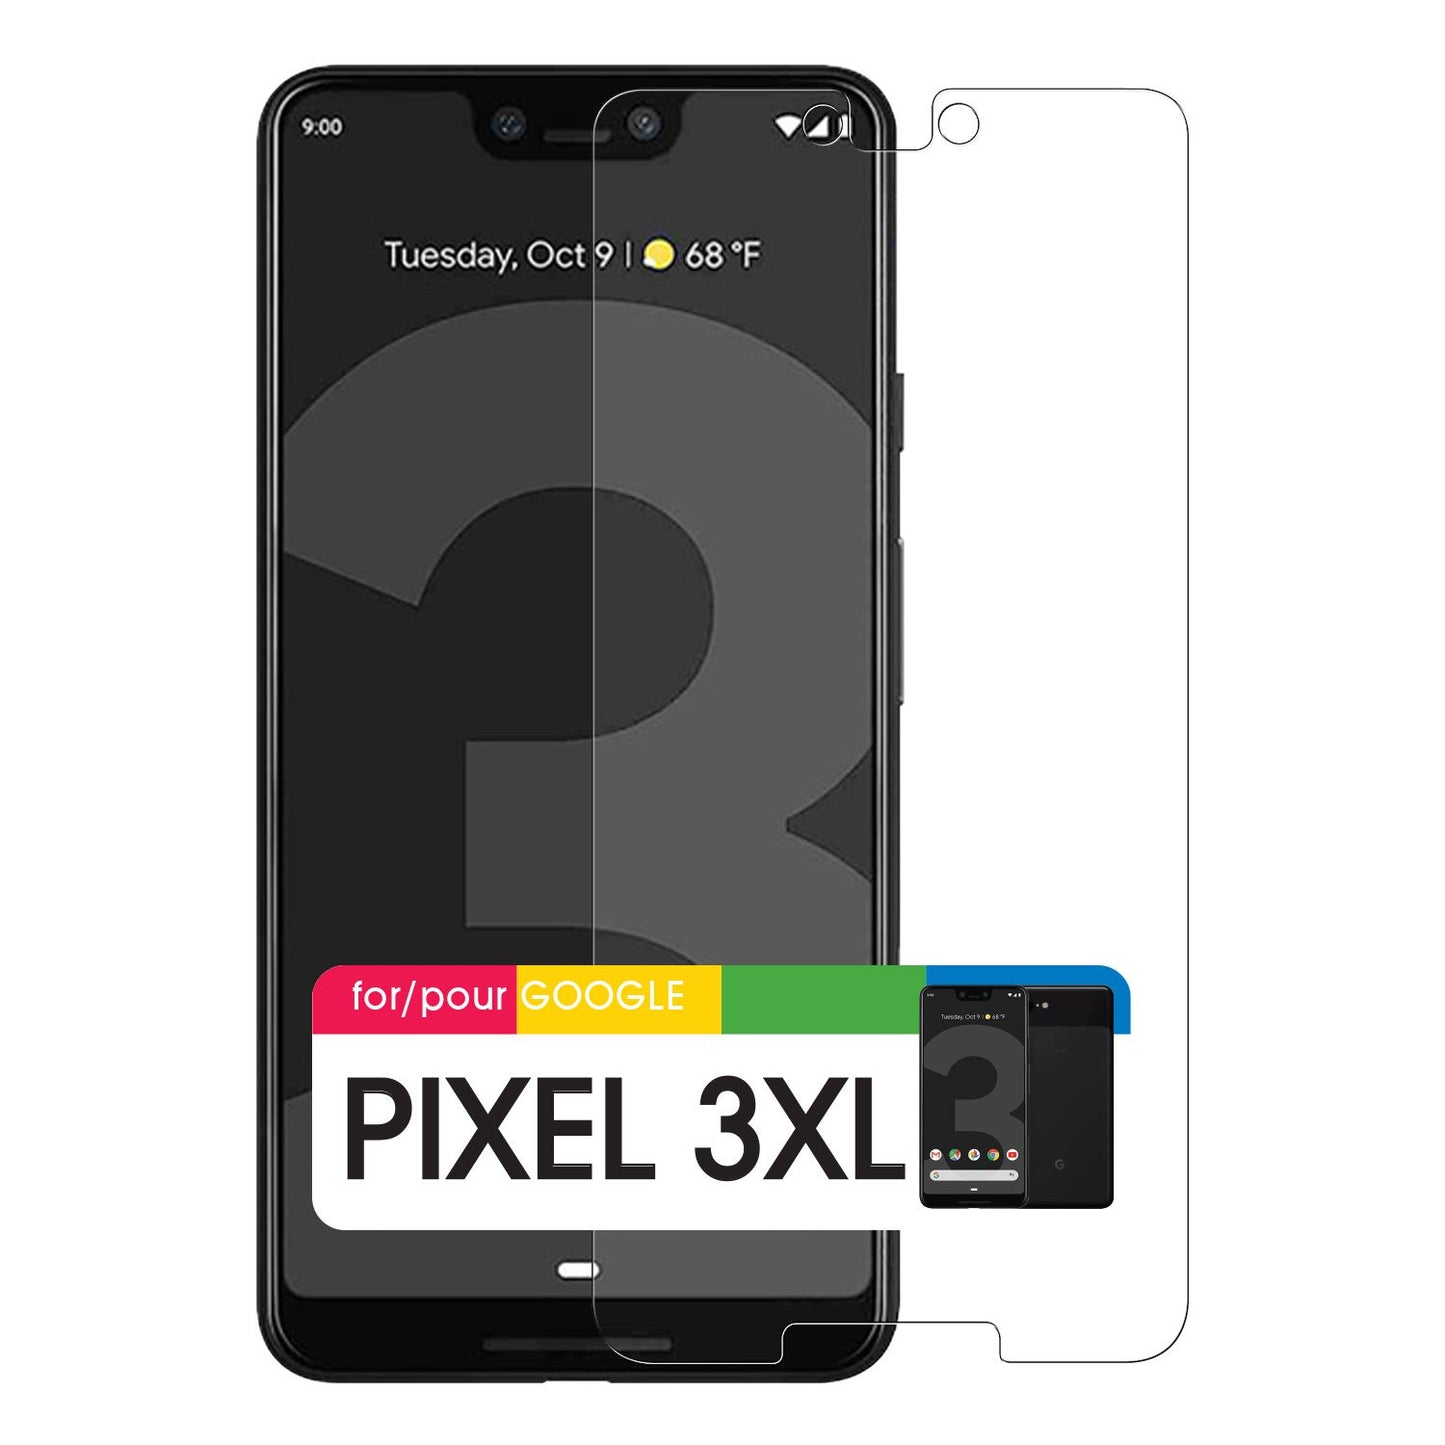 SGGOOPK3XL - Google Pixel 3 XL, Cellet 0.3mm Premium Tempered Glass Screen Protector for Google Pixel 3 XL (9H Hardness)